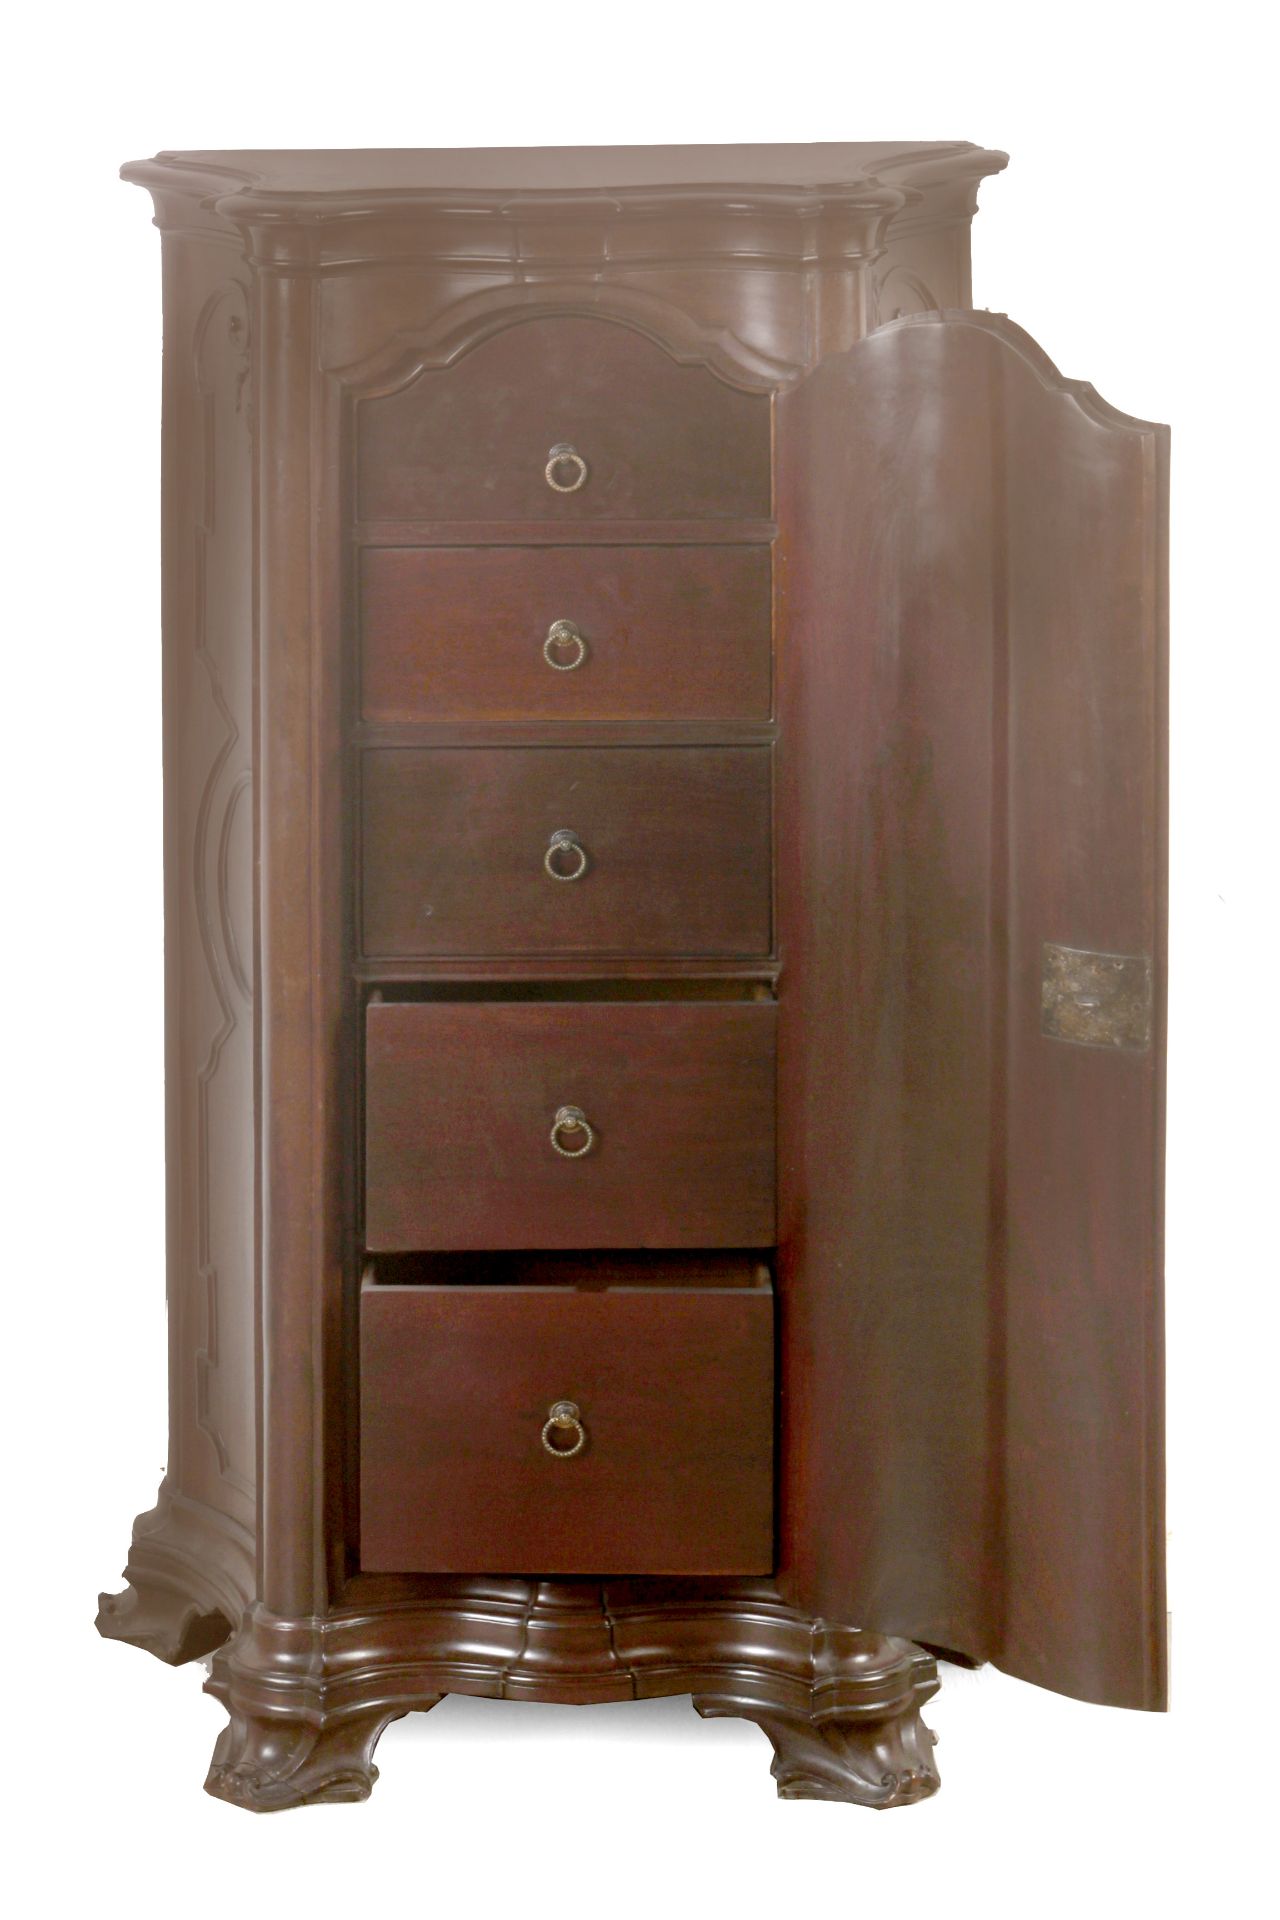 A Portuguese mahogany chest of drawers circa 1800